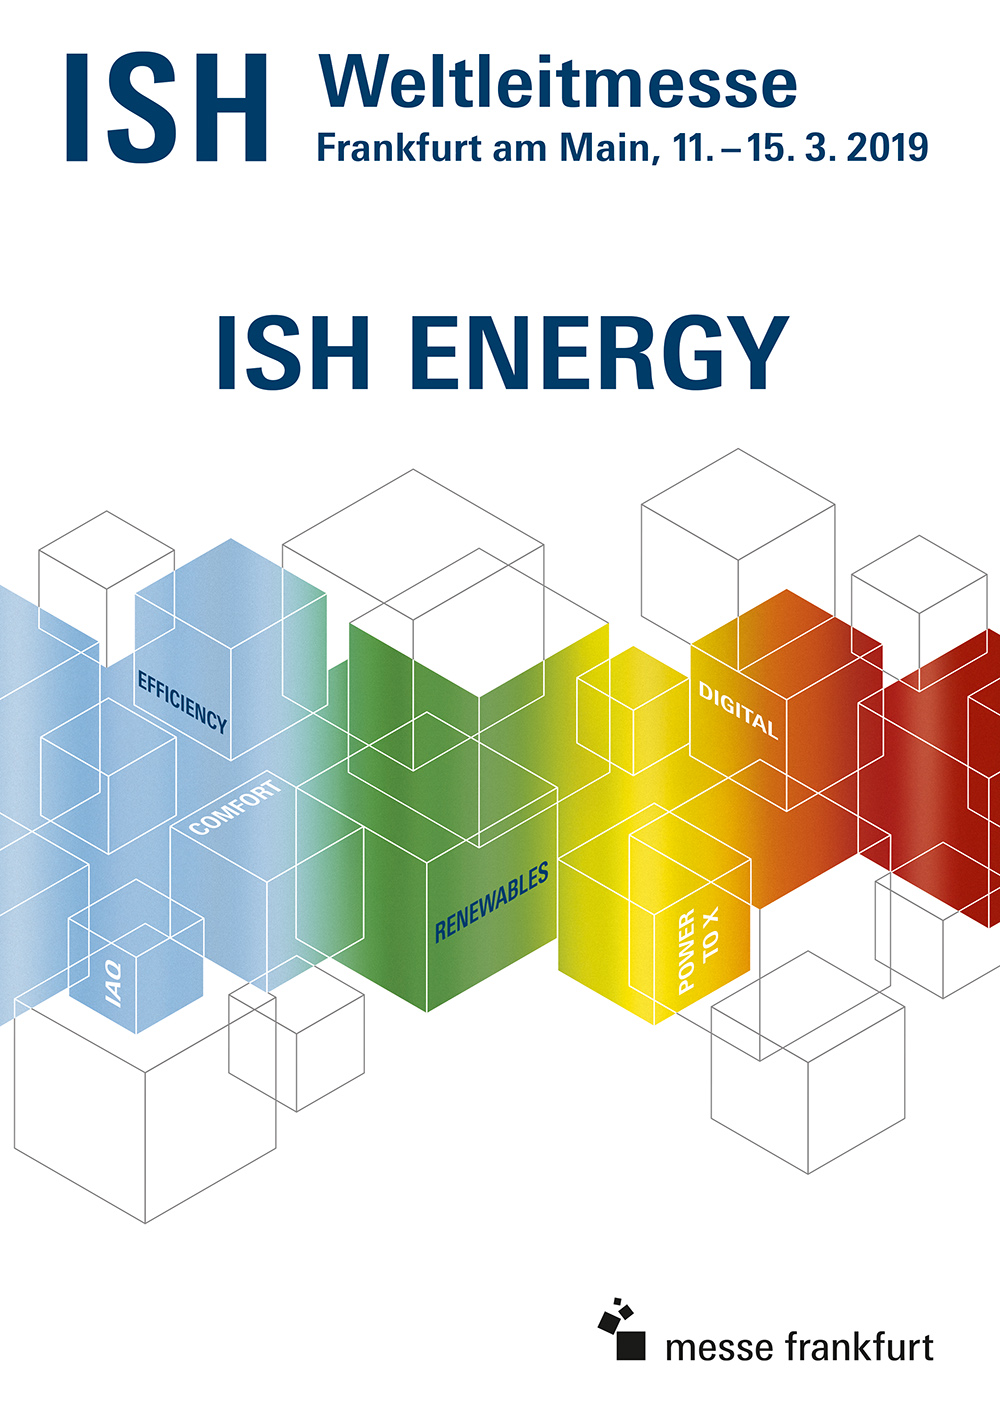 ISH Energy Keyvisual